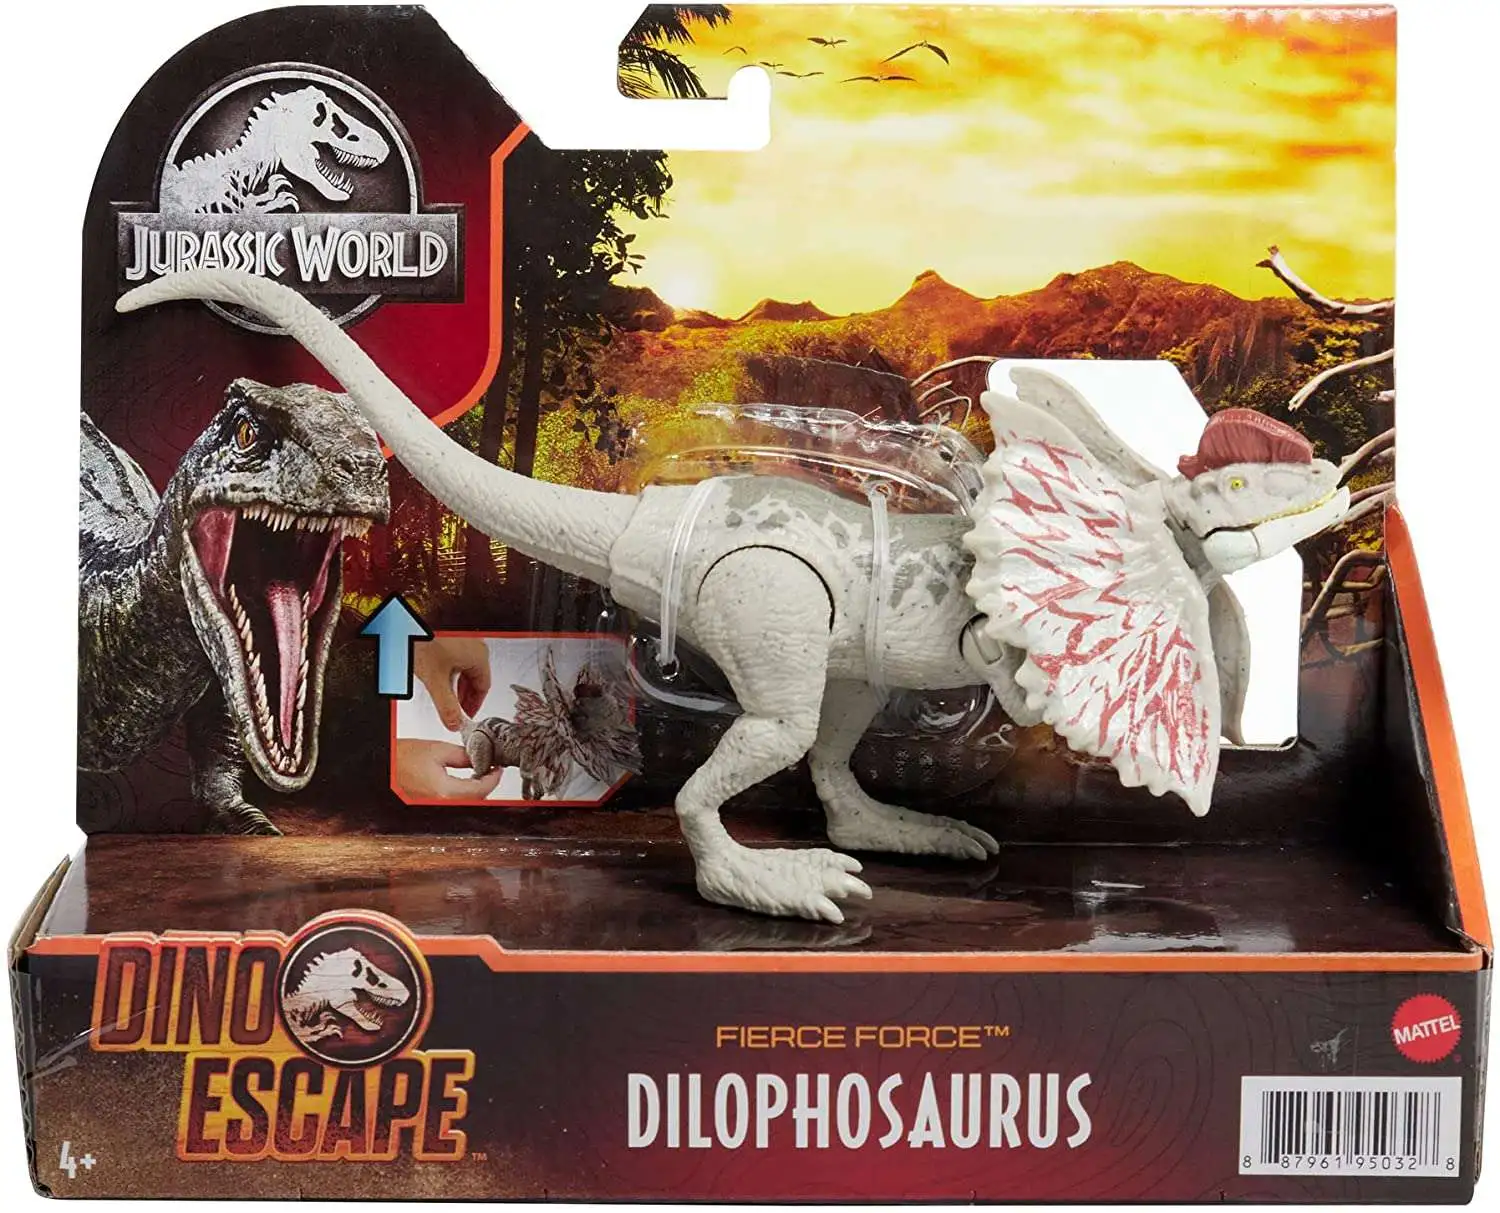 Jurassic World Dino Escape BRACHIOSAURUS Figure Toy Mattel Dinosaur NEW 